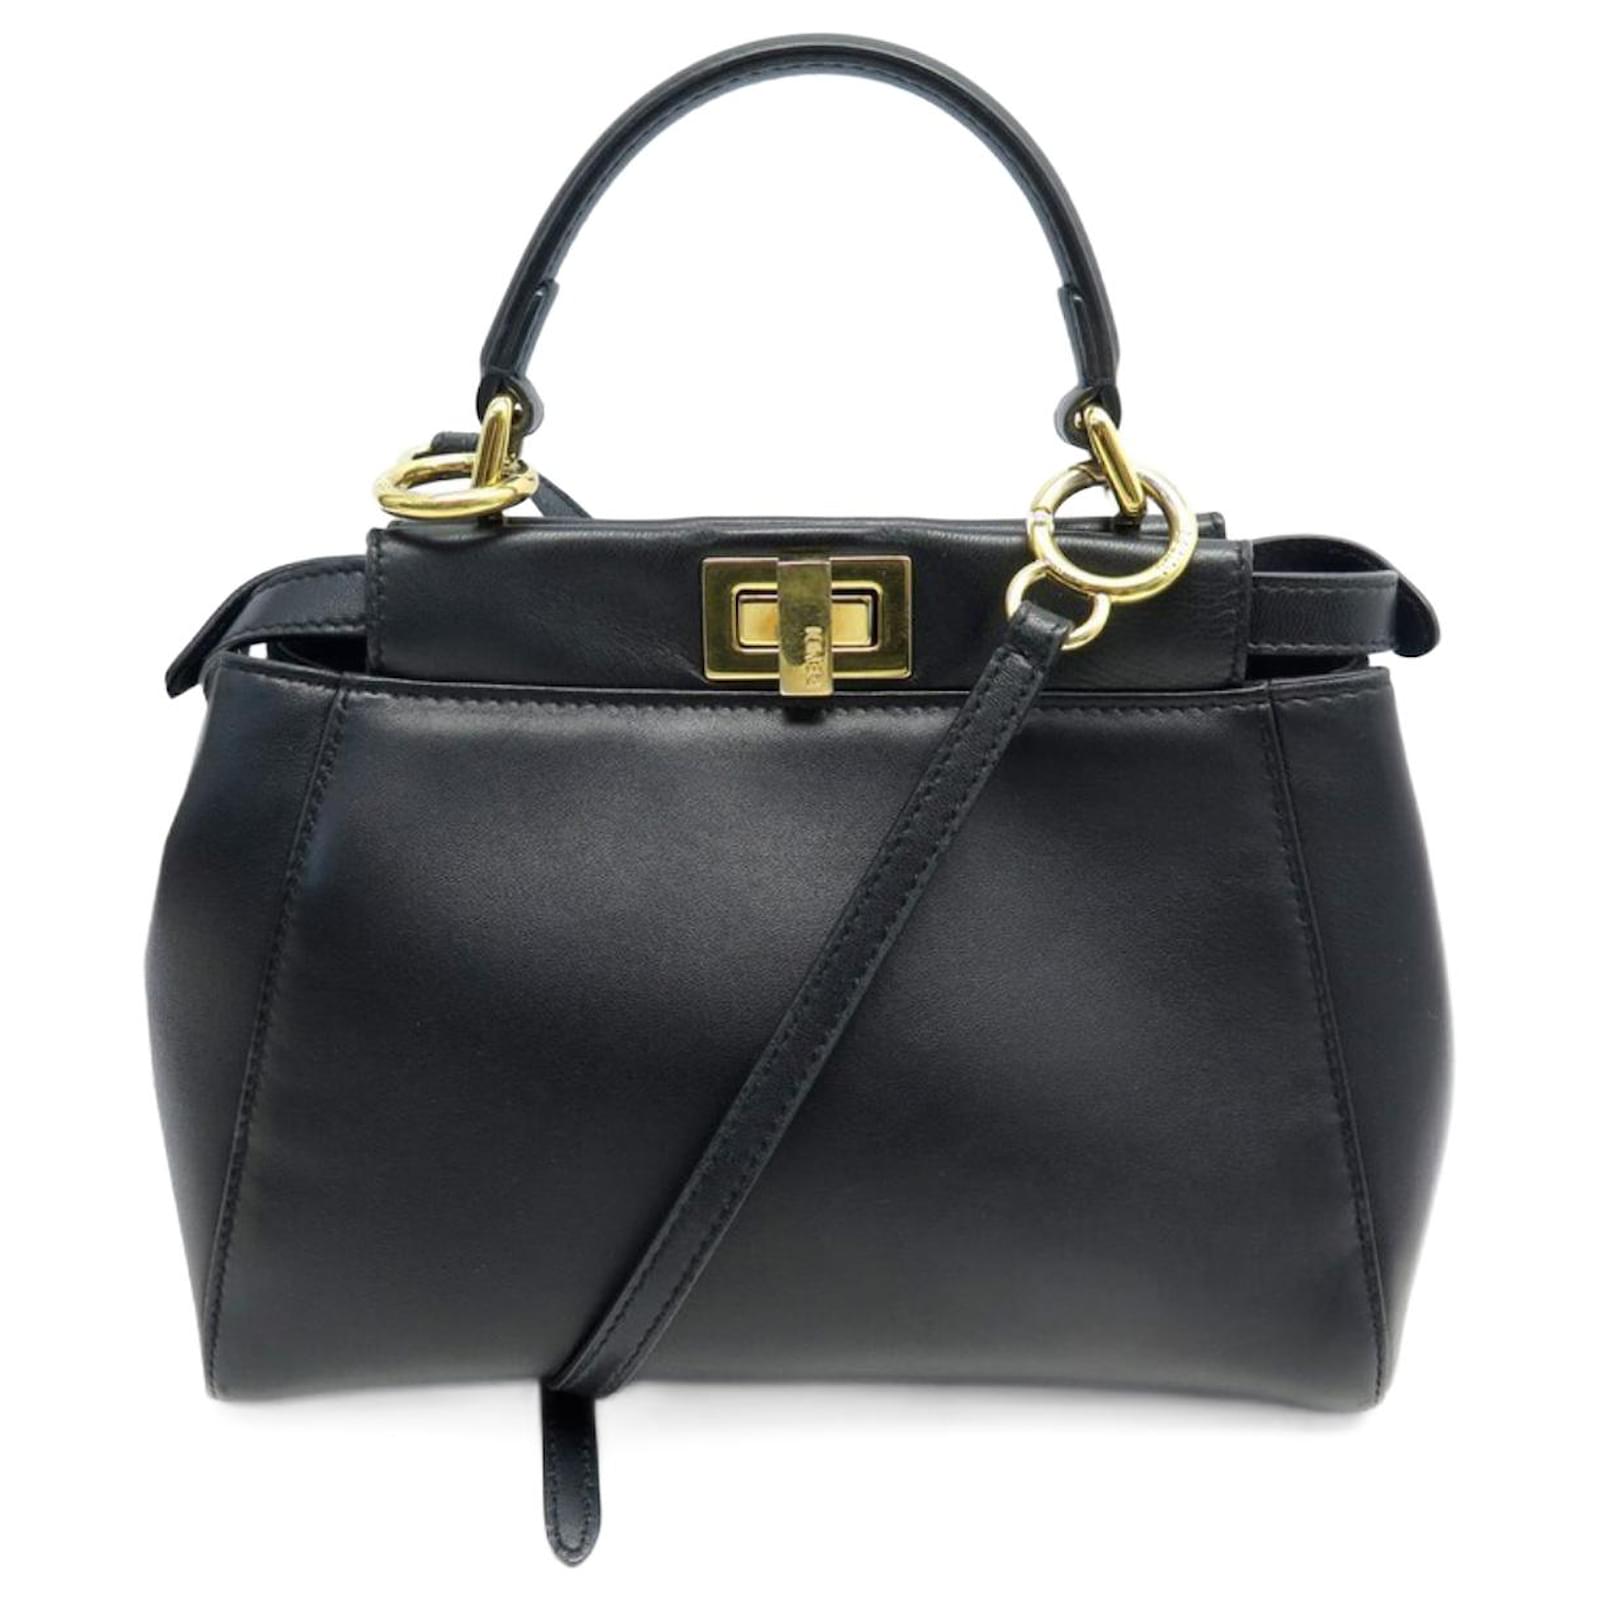 Peek That Bag: The 5 New Fendi Handbags Bound To Turn Heads This Fall |  Vogue